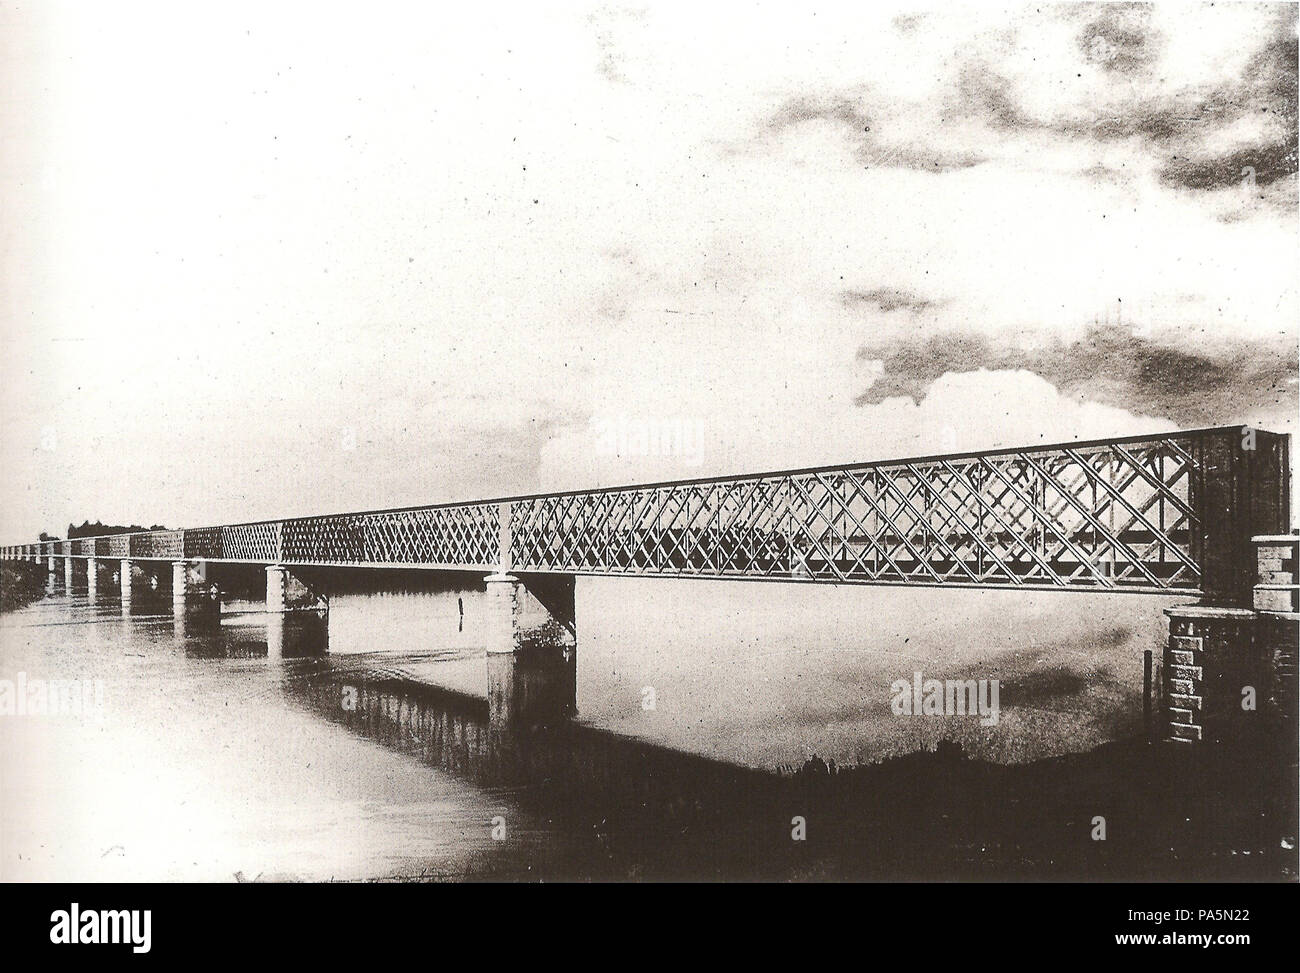 317 Travata metallica del ponte sul Fiume Toce Banque D'Images